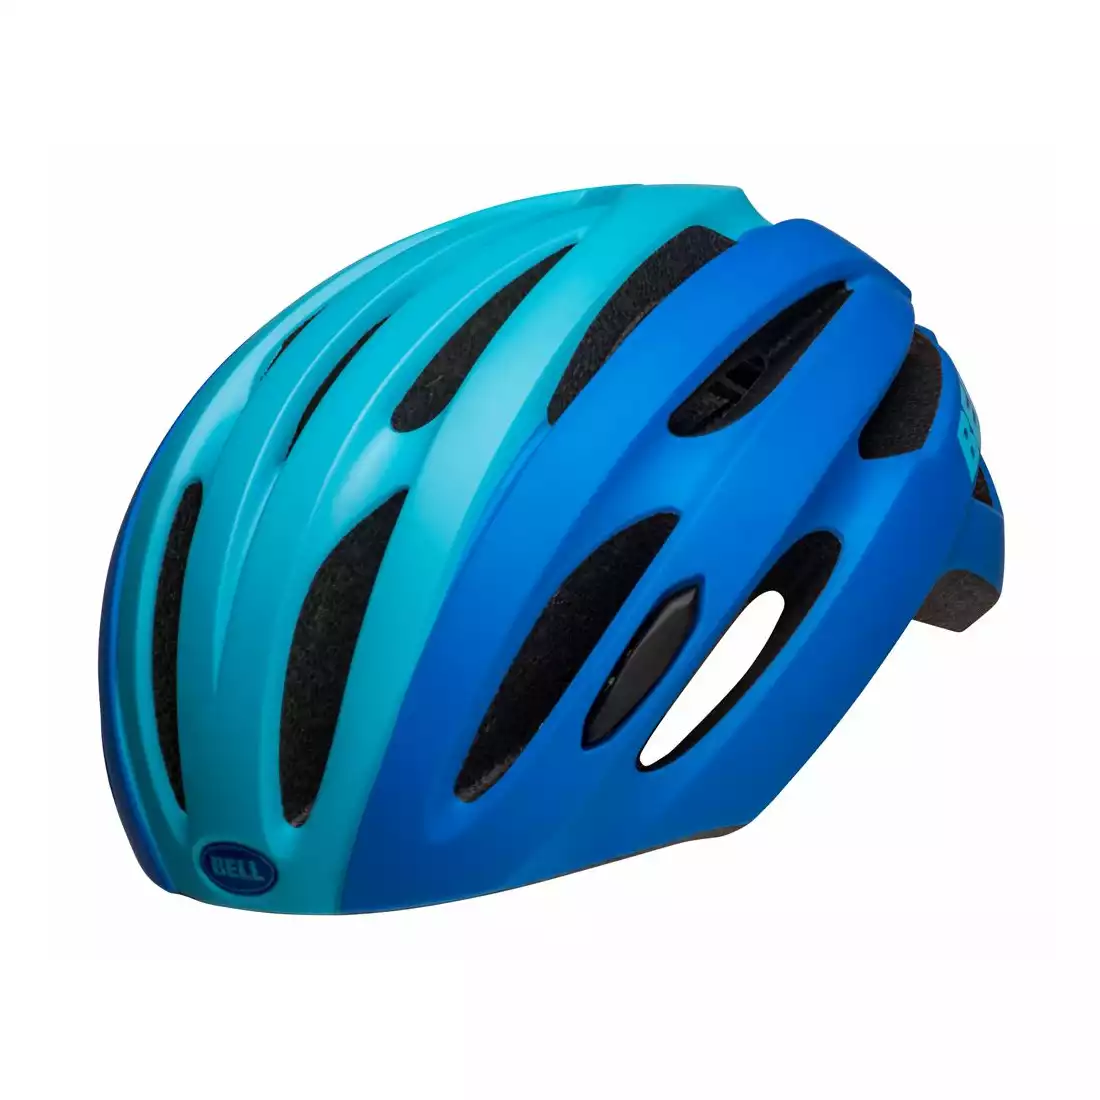 BELL AVENUE INTEGRATED MIPS road bike helmet, mat blue